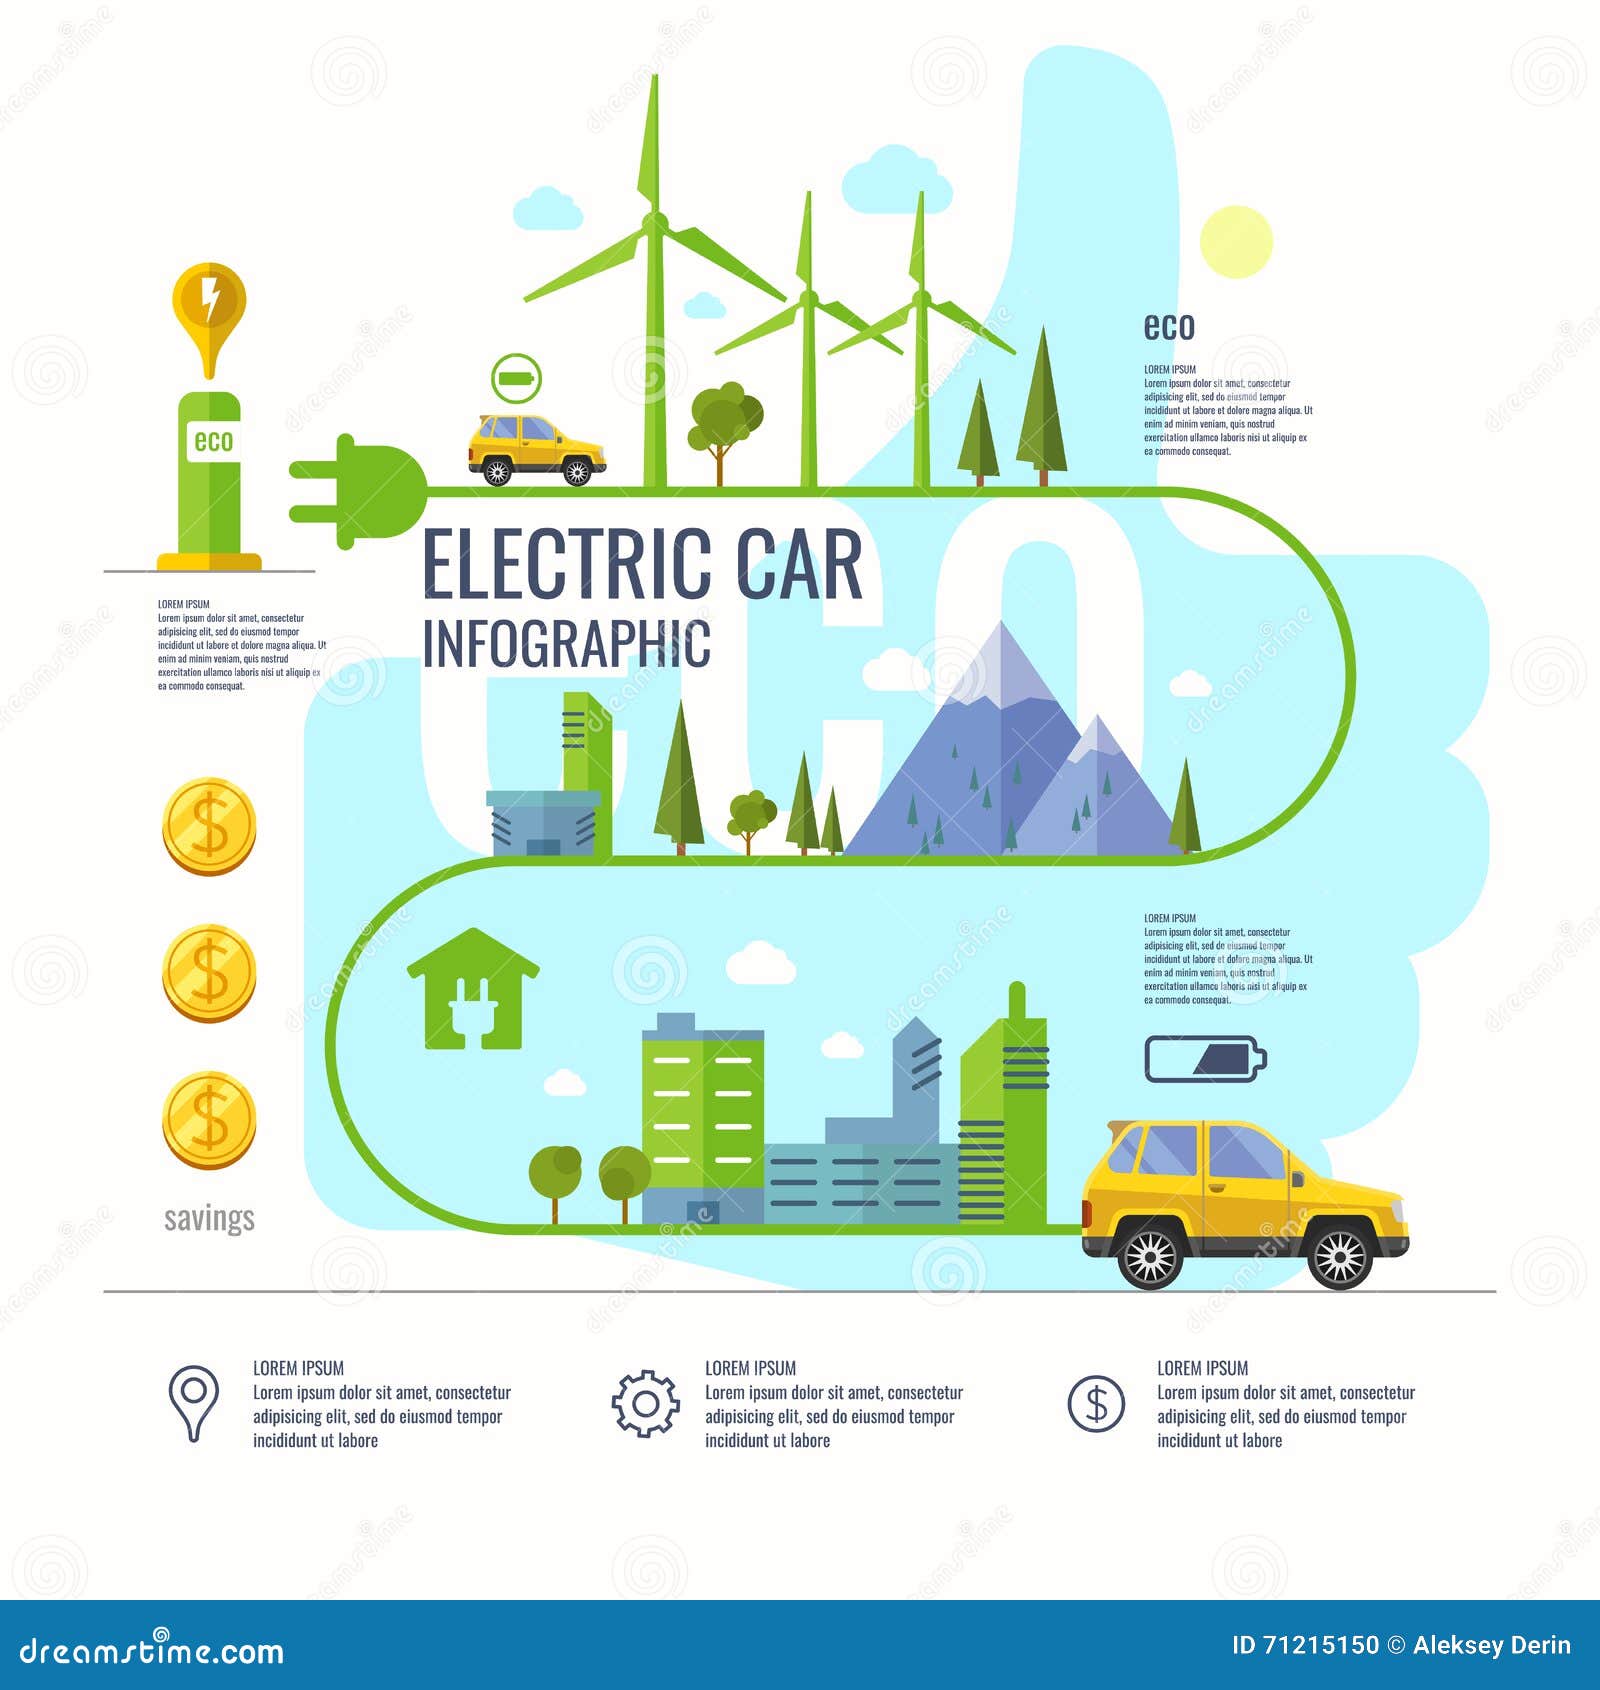 Electric Car Infographic Vector Illustration | CartoonDealer.com #68189074